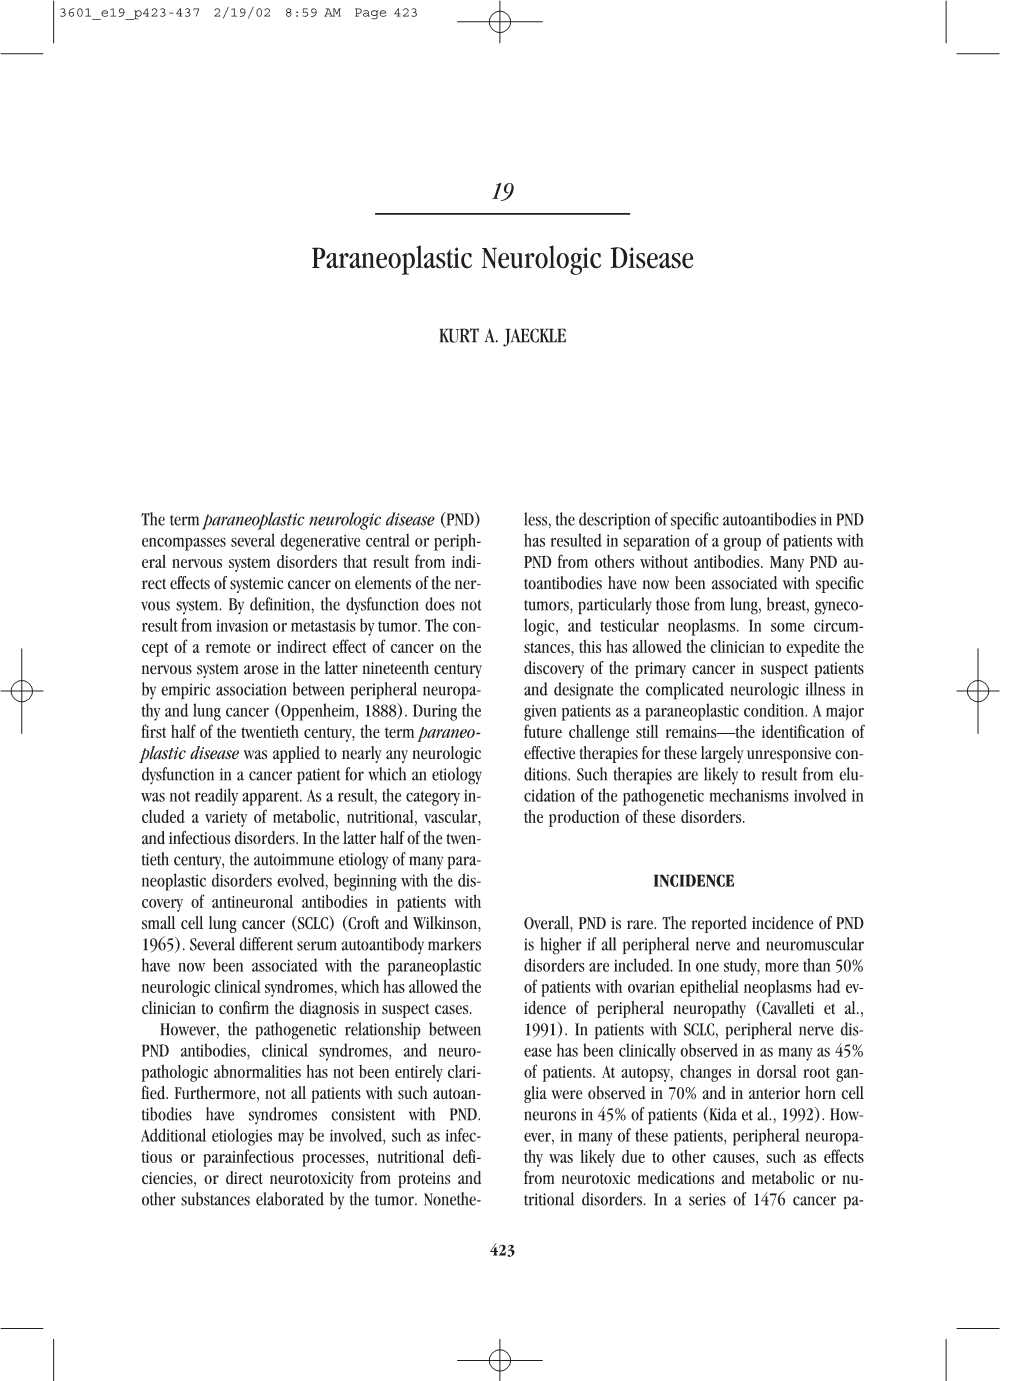 Paraneoplastic Neurologic Disease